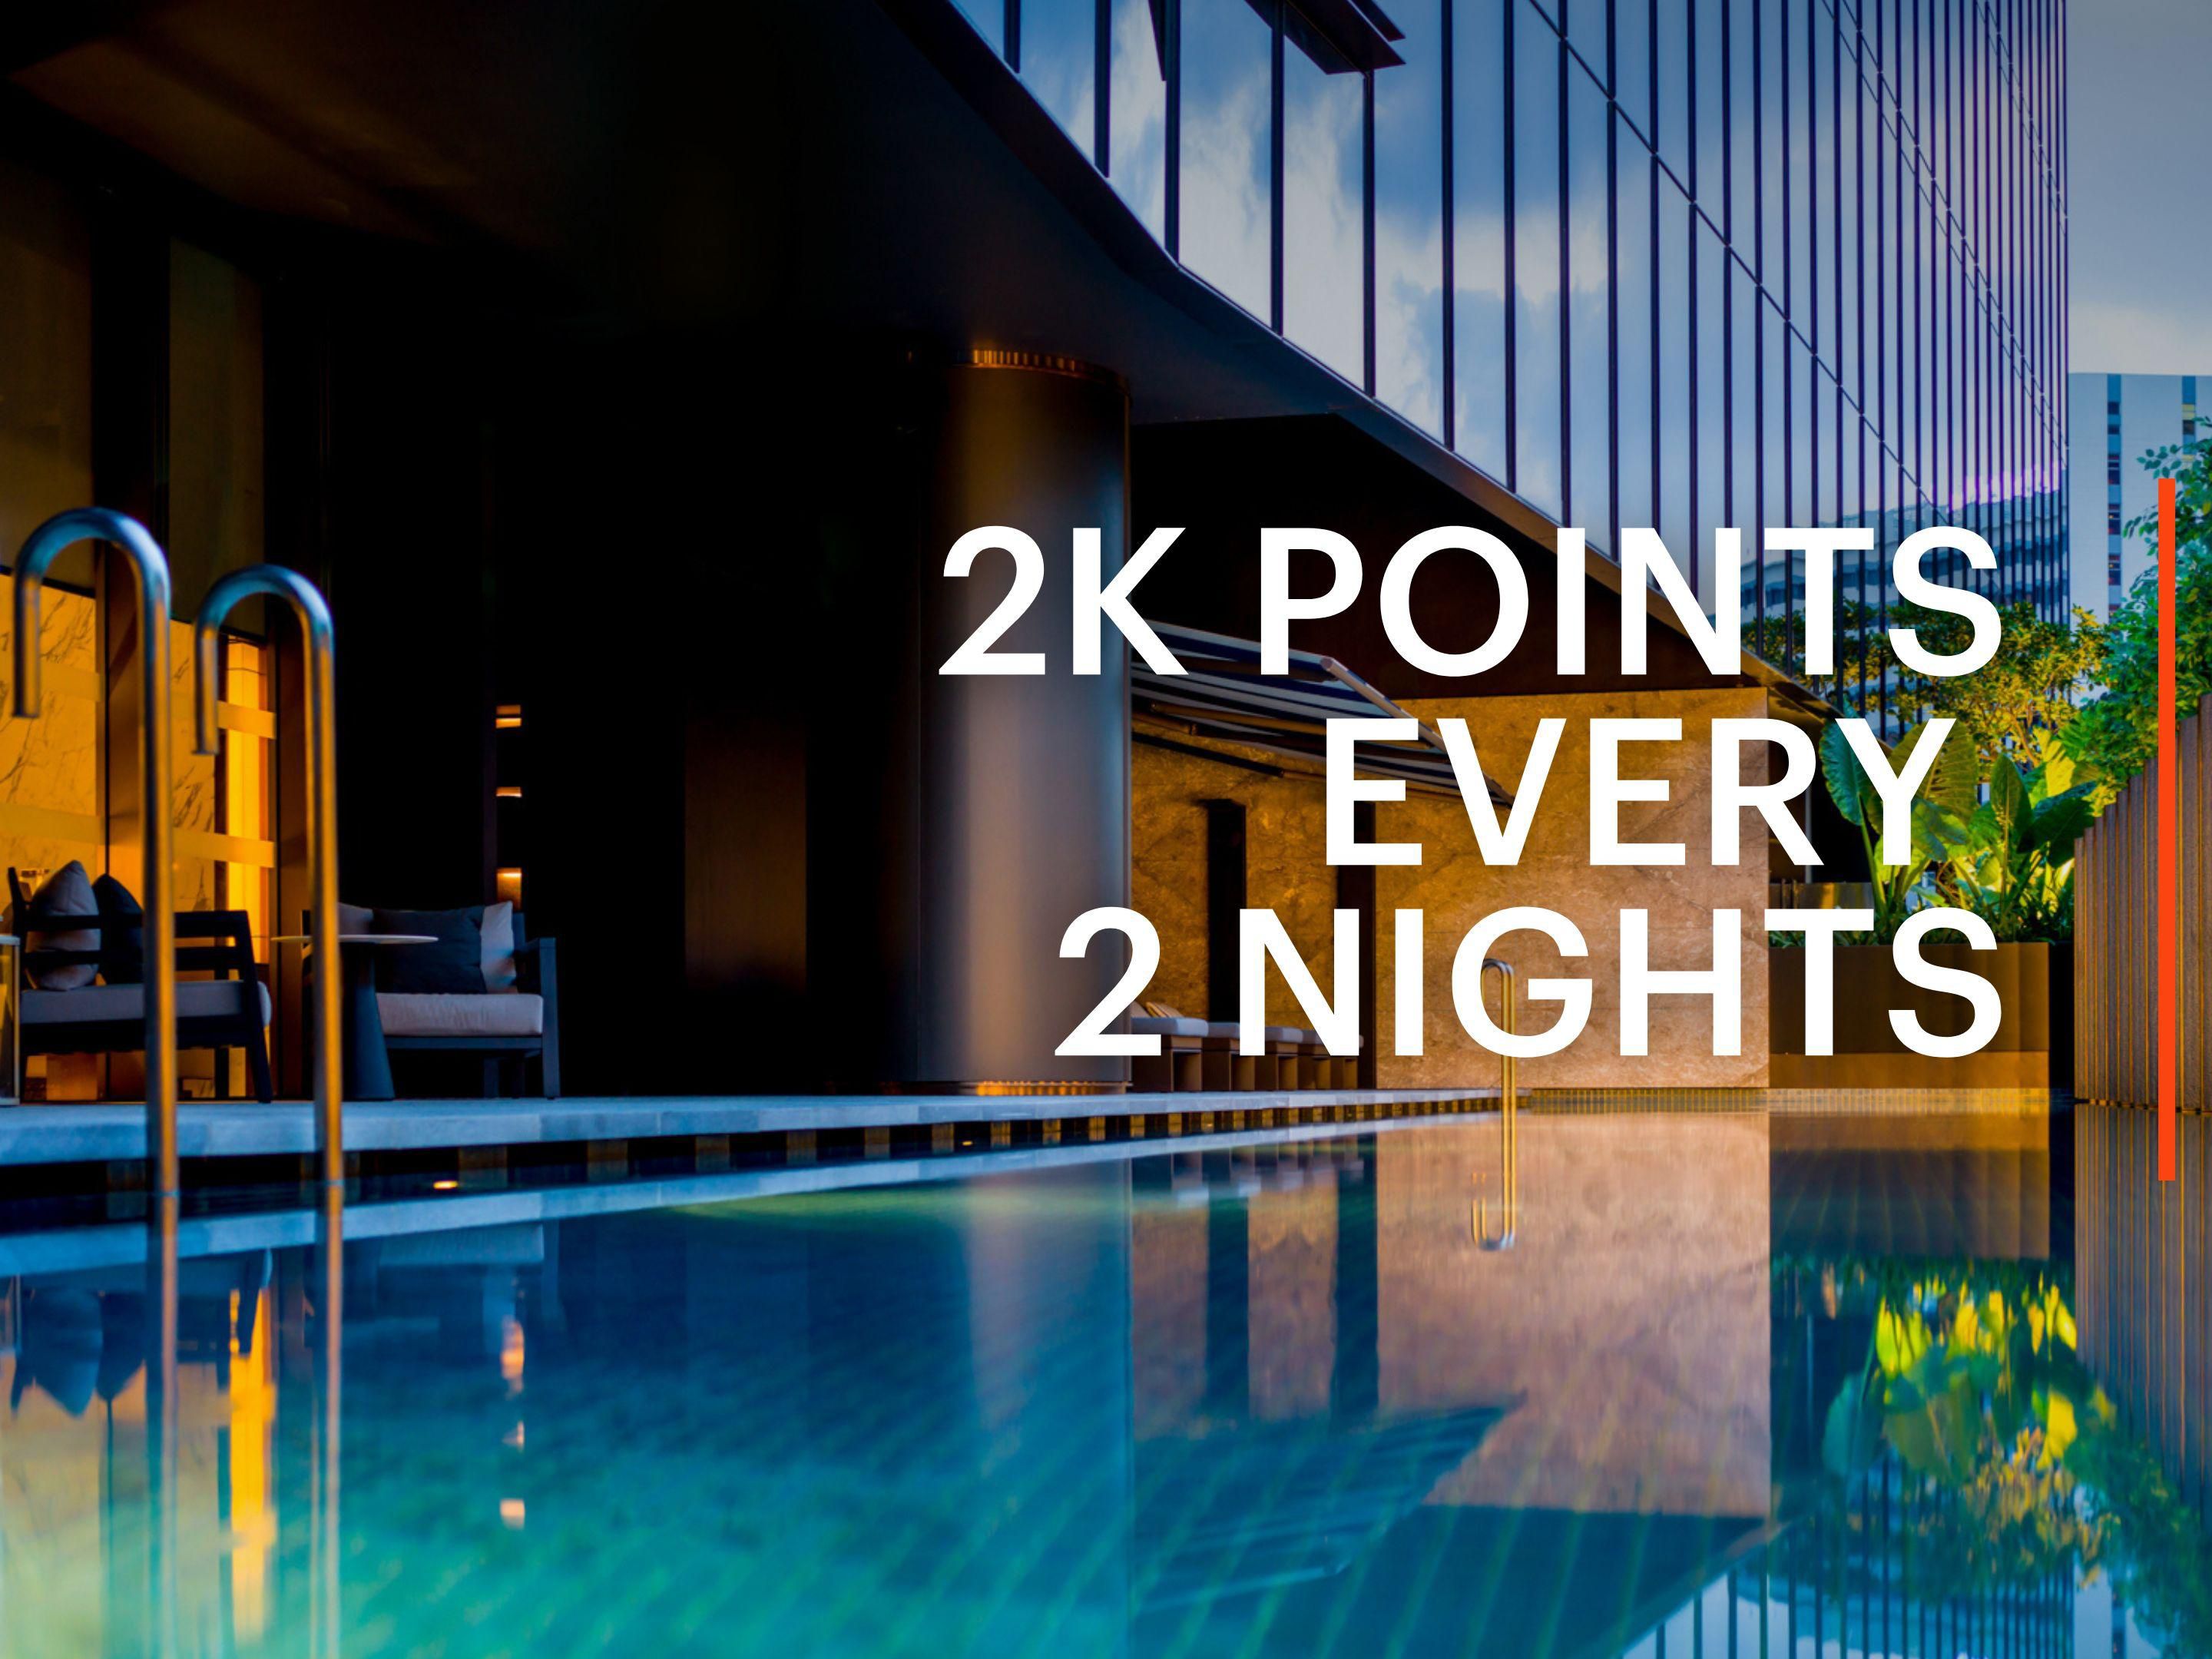 Earn 2K points every 2 nights